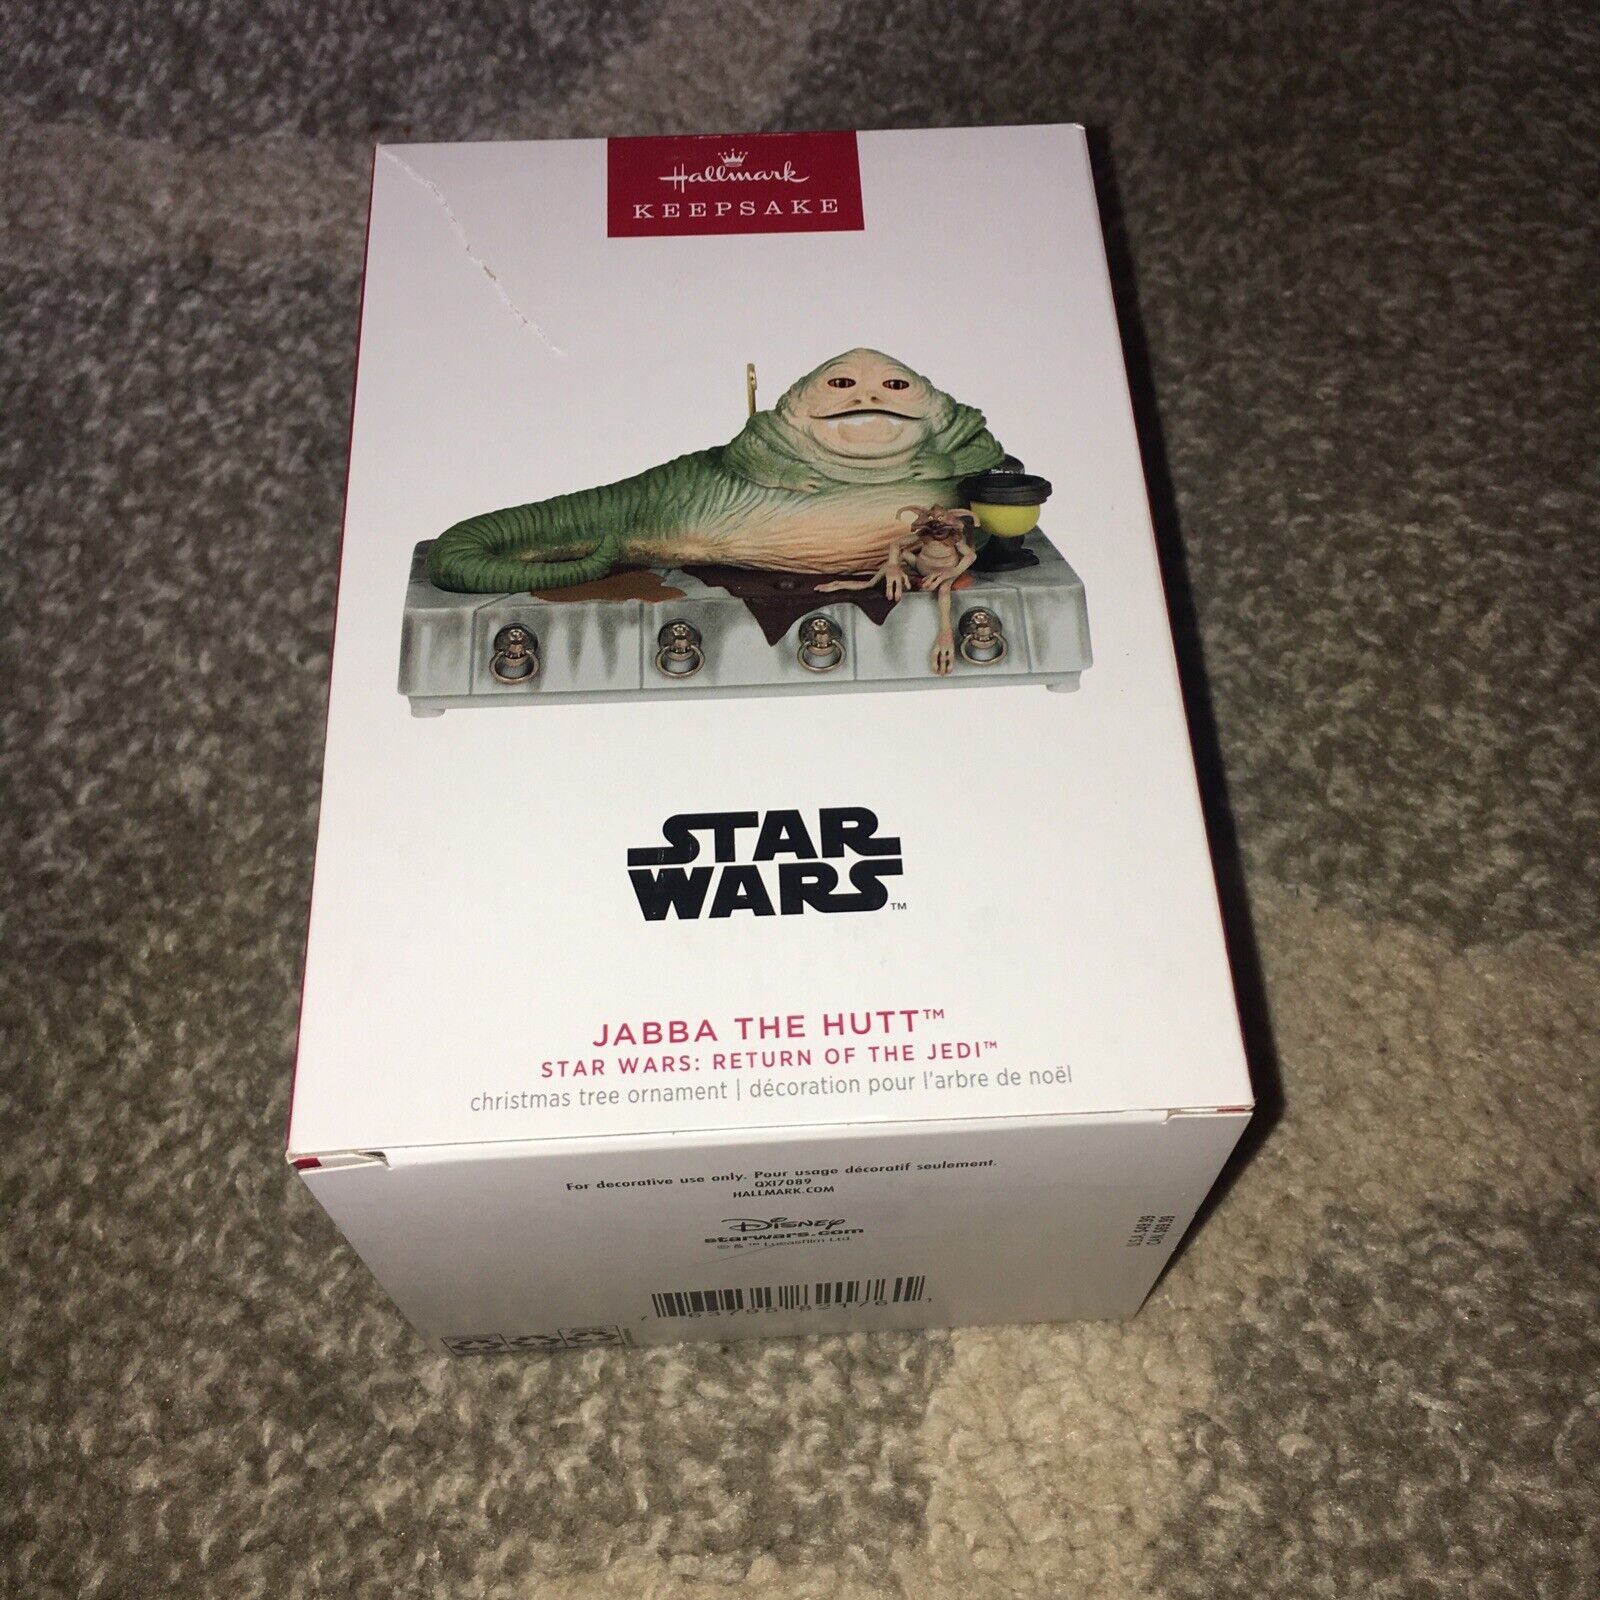 New in Box (Box Light Damage) 2023 Jabba the Hutt Star Wars